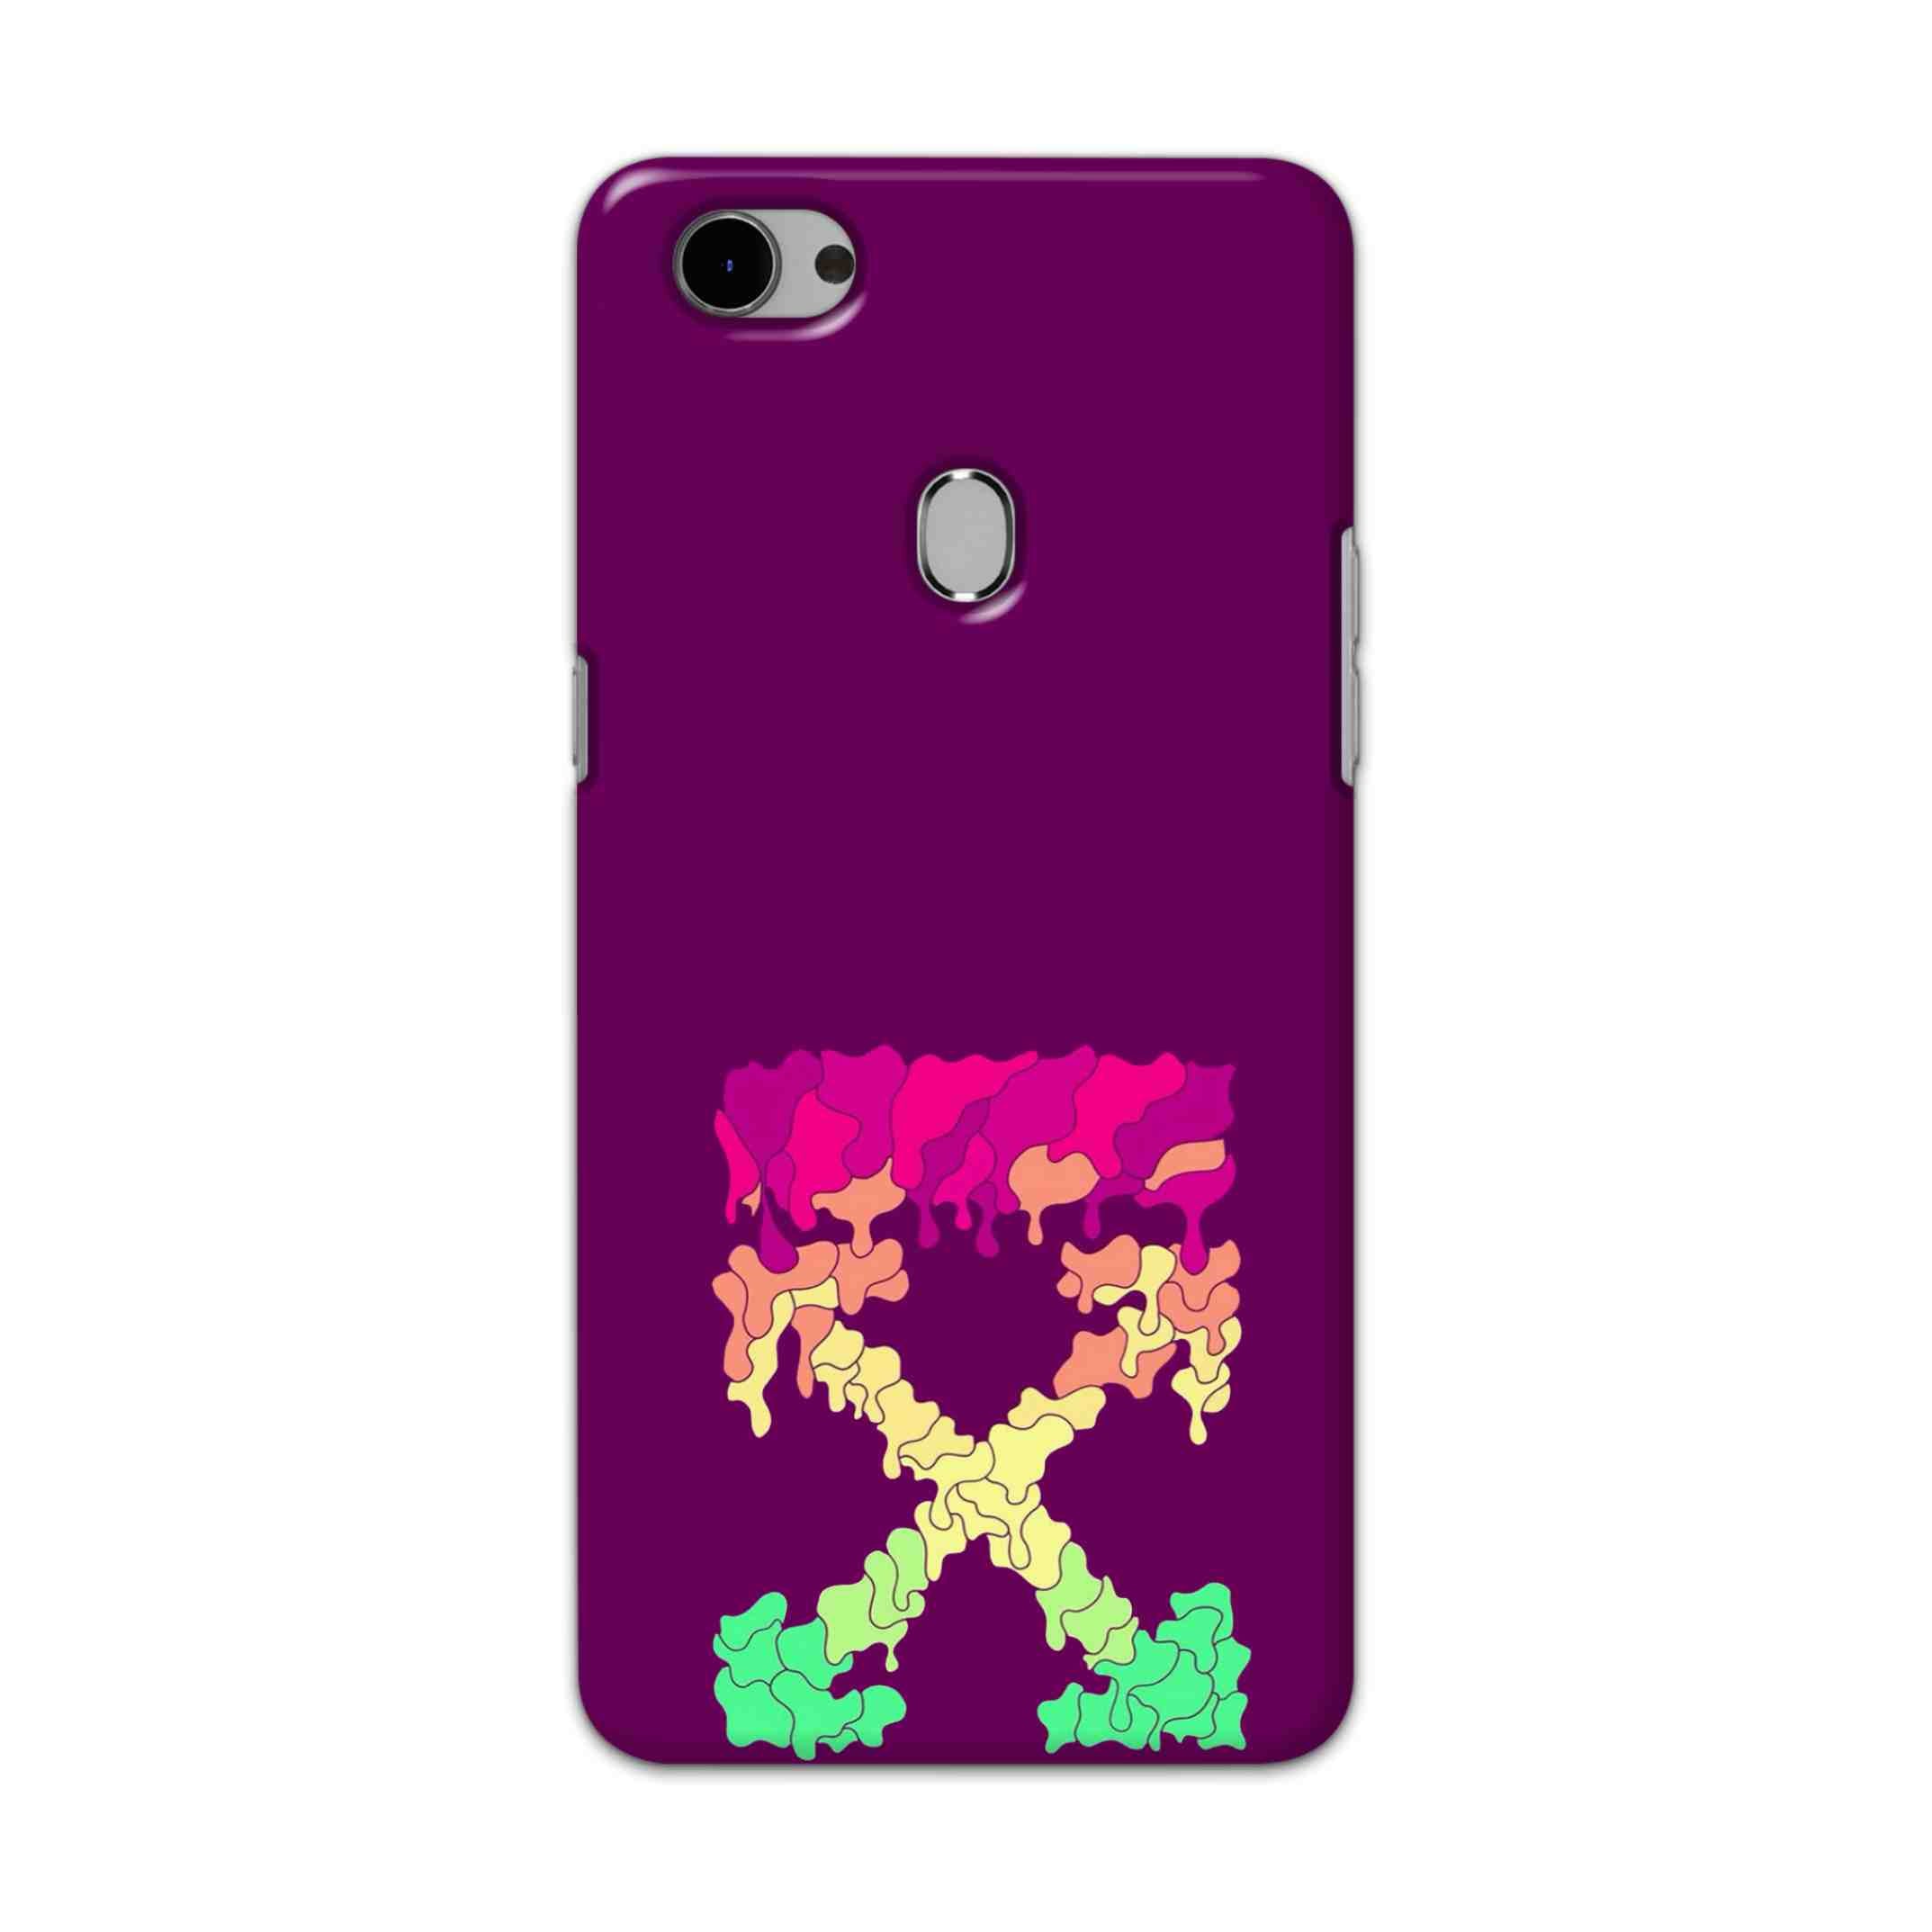 Buy X.O Hard Back Mobile Phone Case Cover For Oppo F7 Online